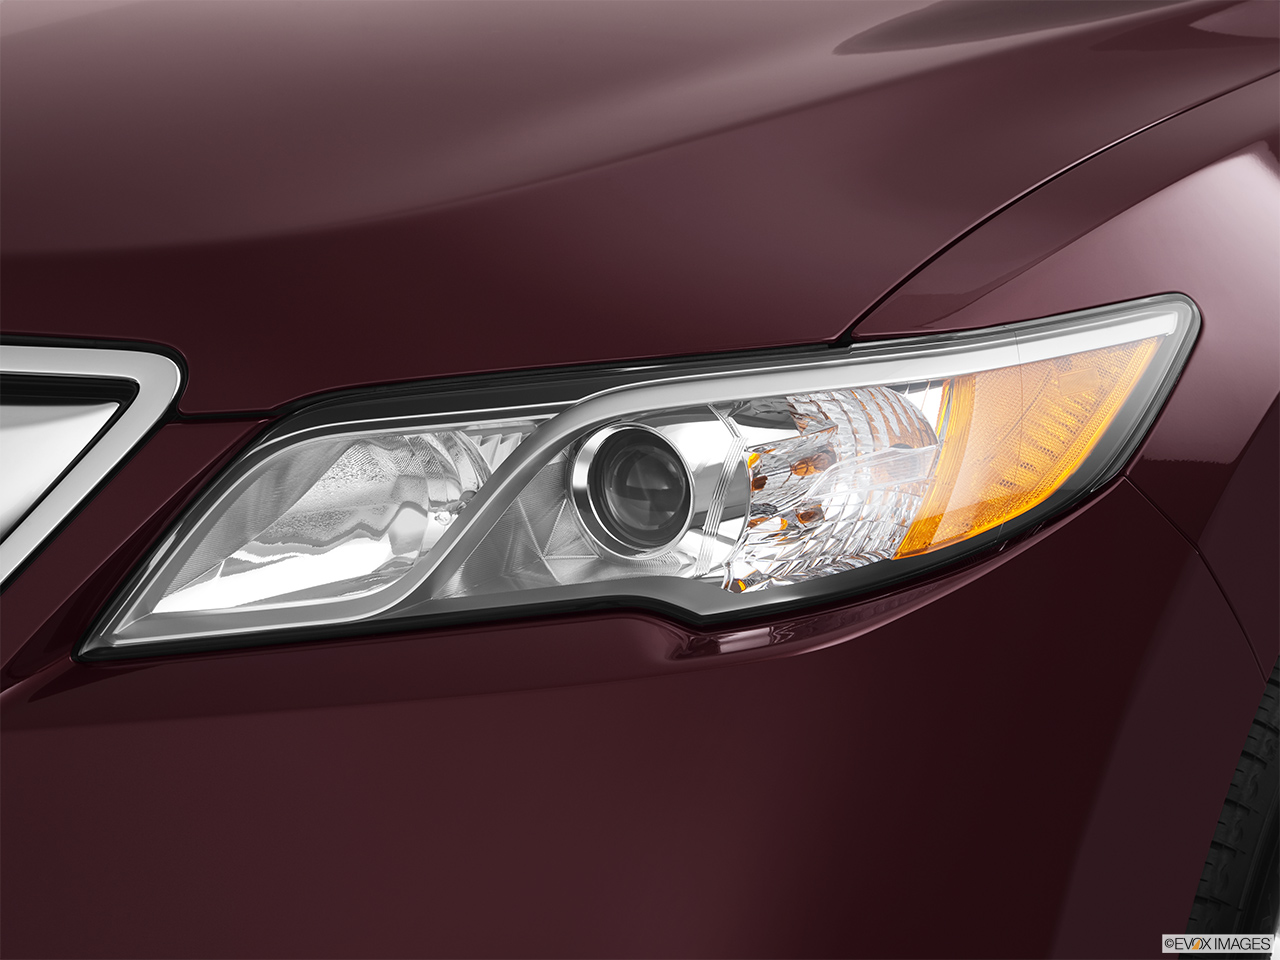 2013 Acura RDX AWD Drivers Side Headlight. 